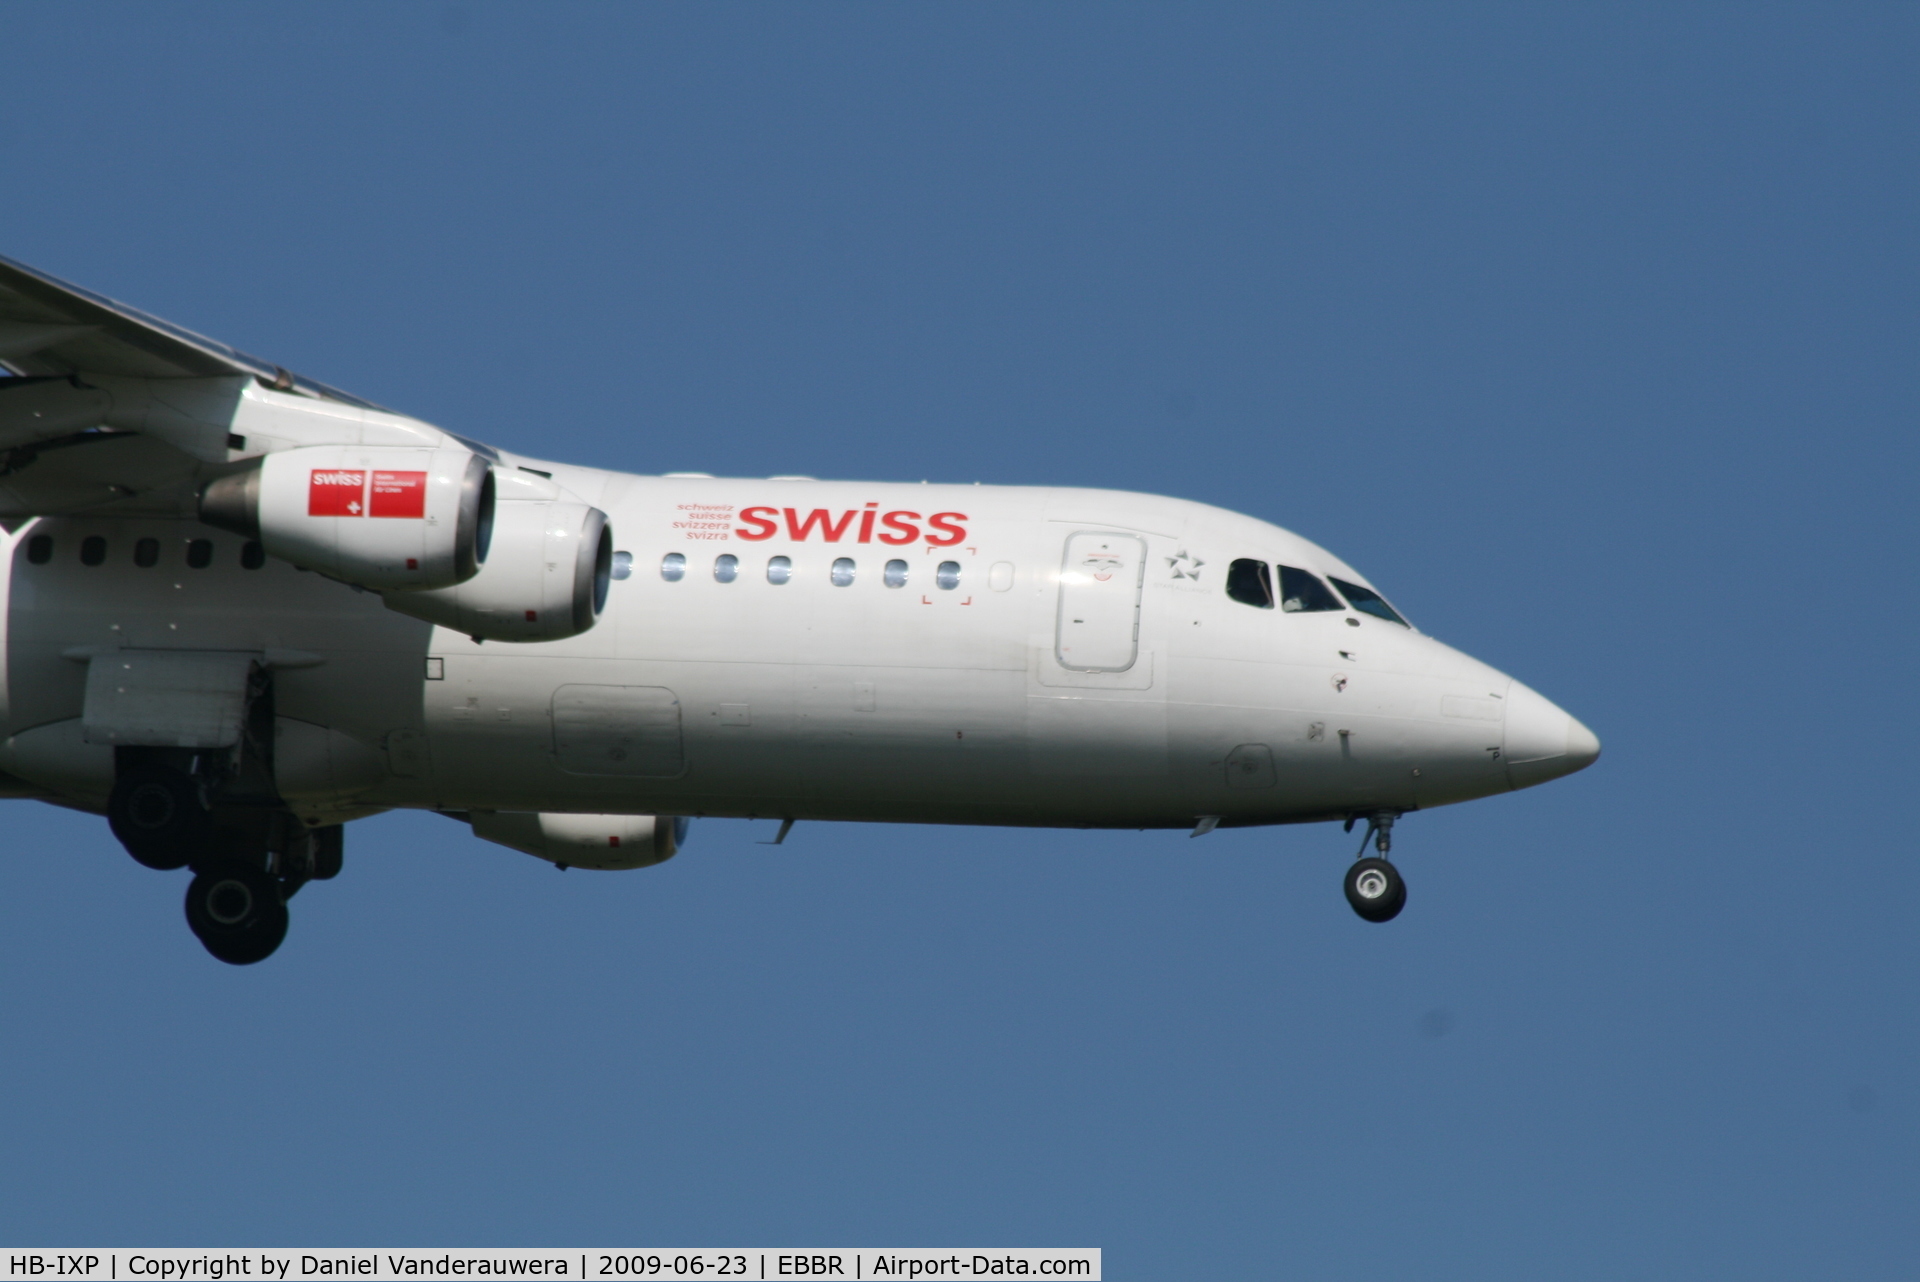 HB-IXP, 1996 British Aerospace Avro 146-RJ100 C/N E3283, Arrival of flight LX778 to RWY 02